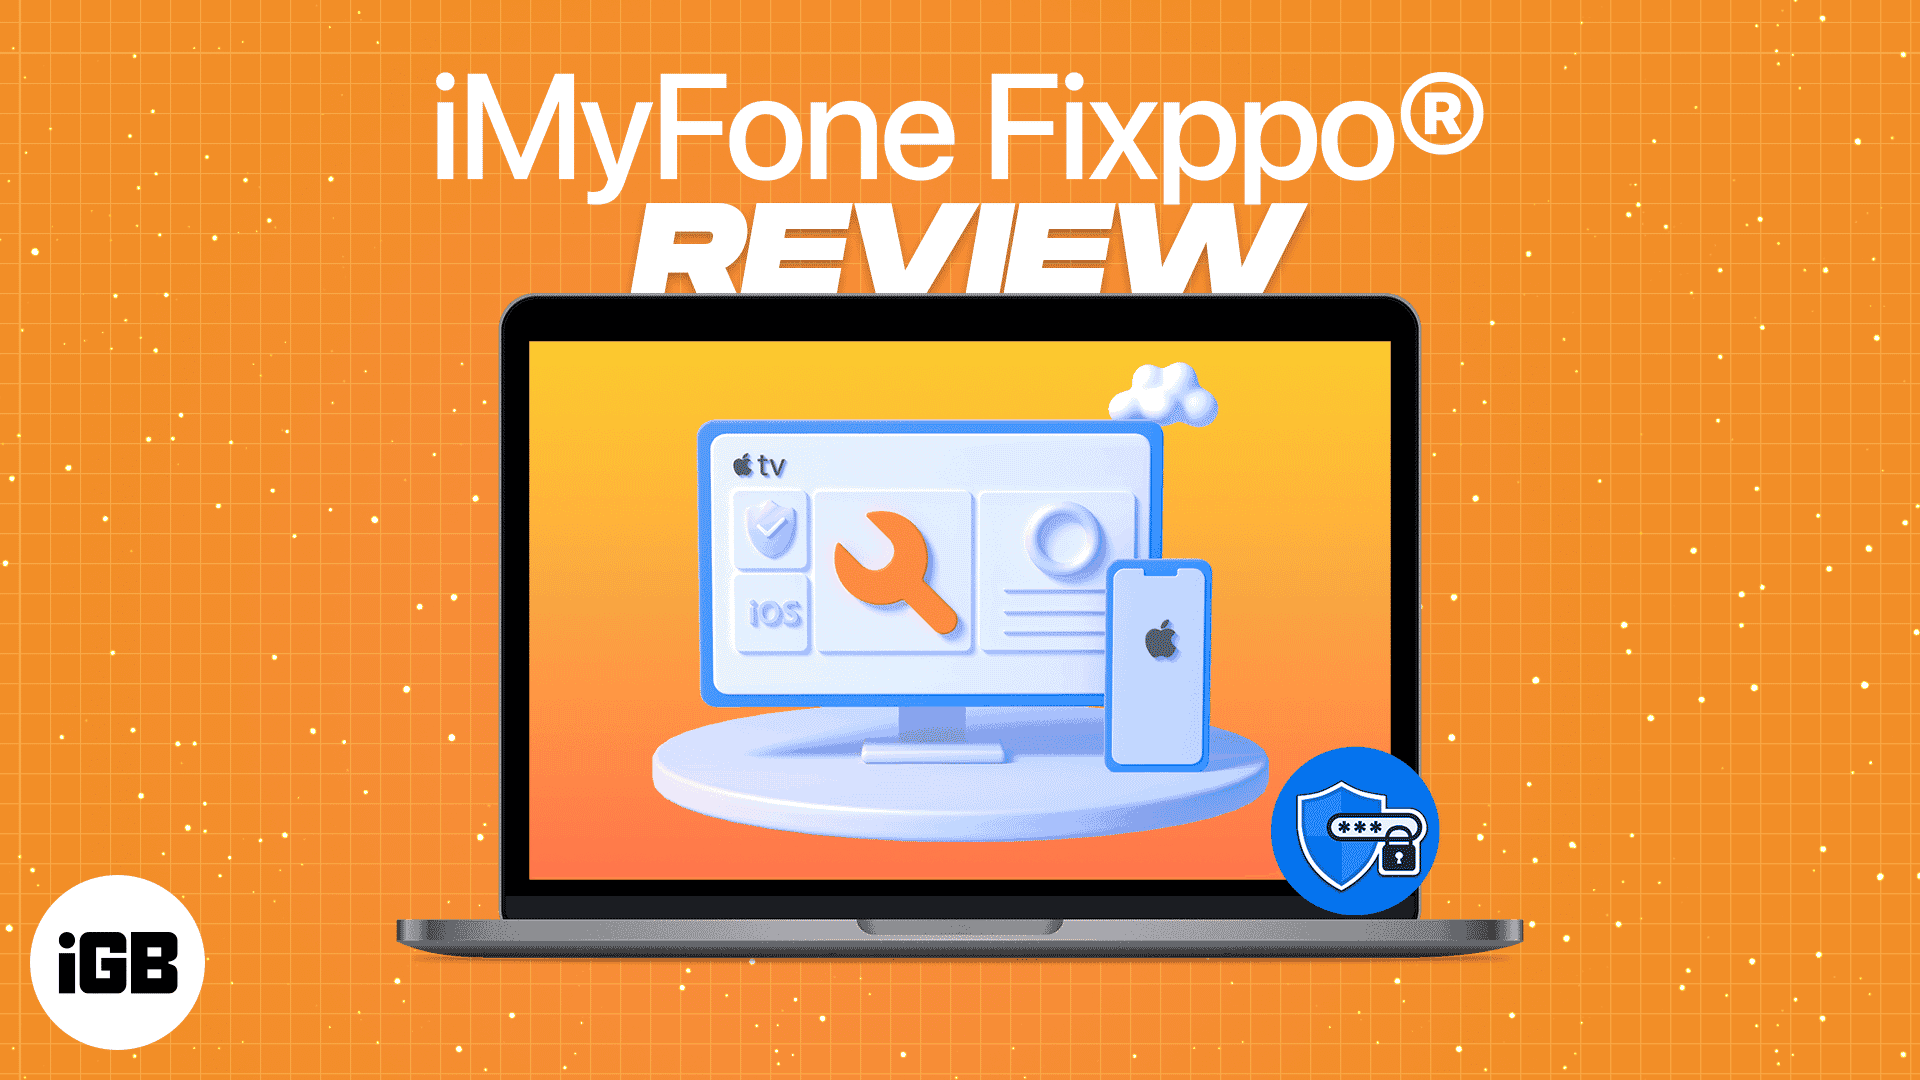 Imyfone fixppo review